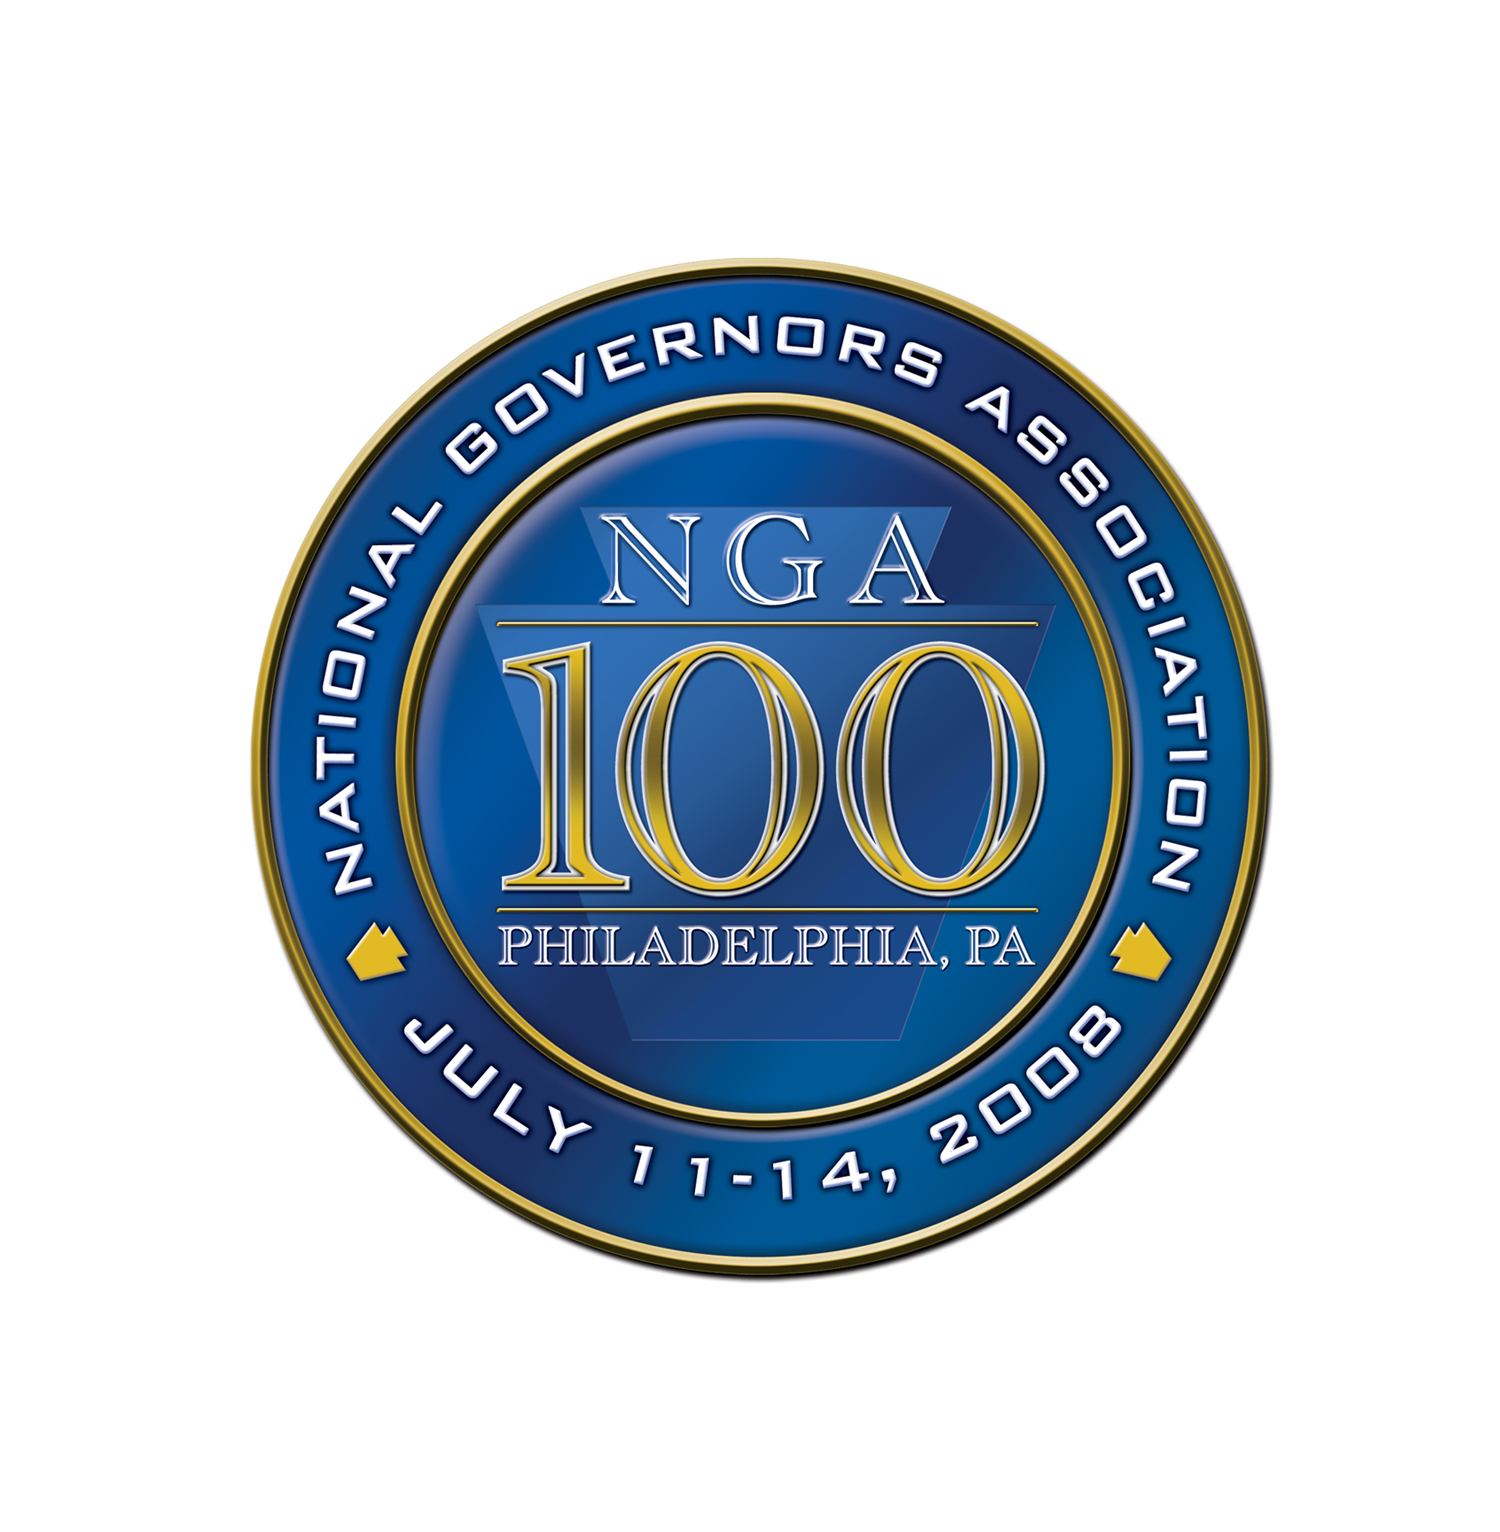 National Governors Association Centennial Meeting logo